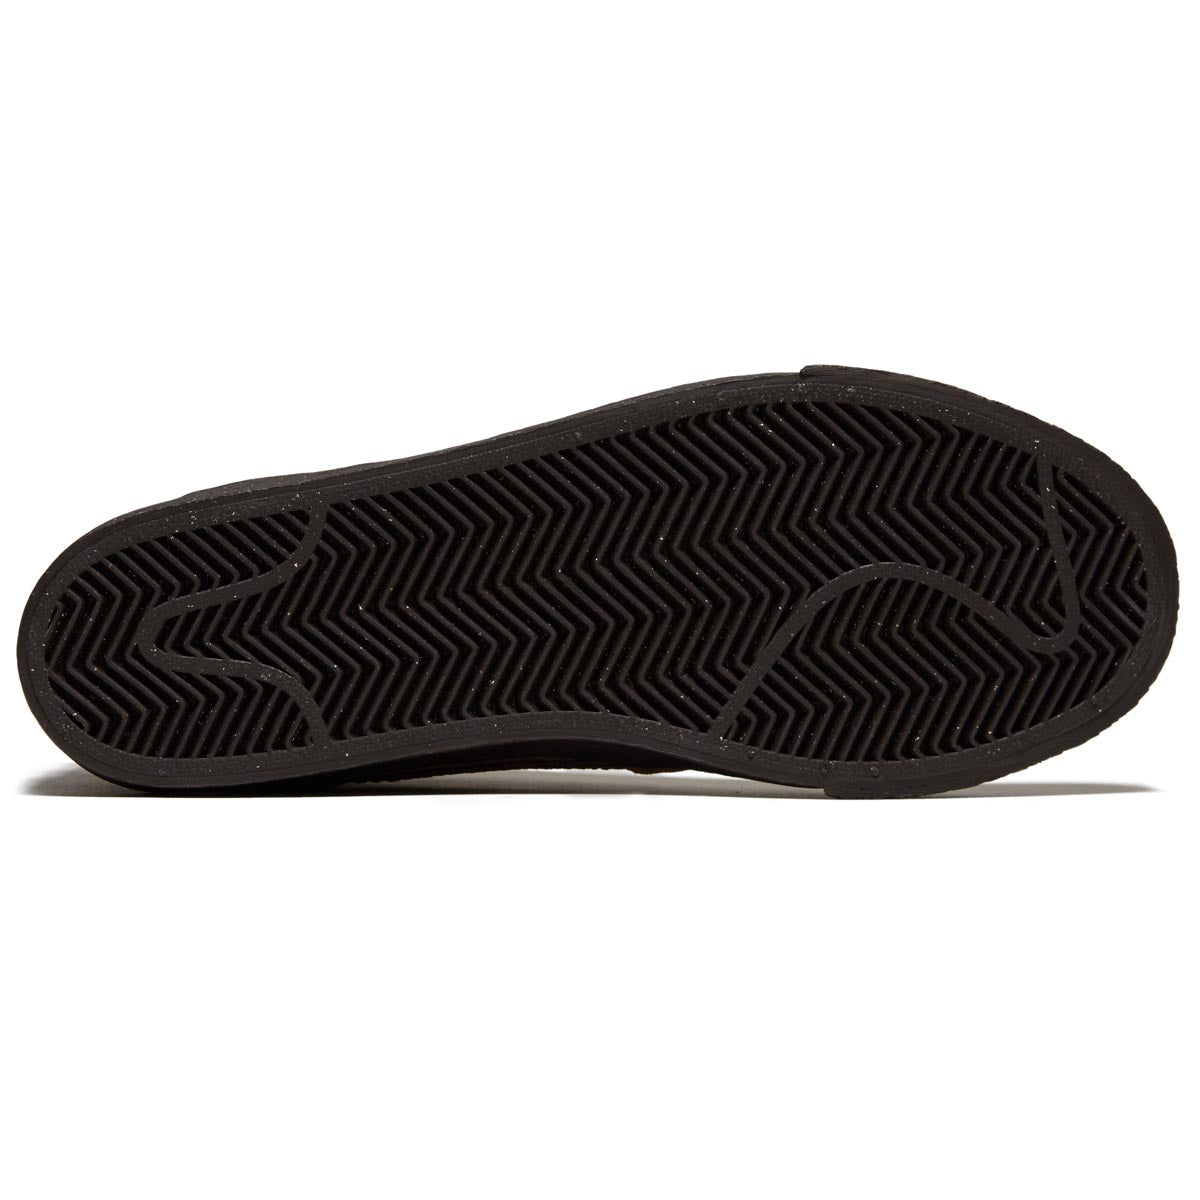 Nike SB Zoom Blazer Mid Premium Shoes - Legend Dark Brown/Fir/Obsidian image 4